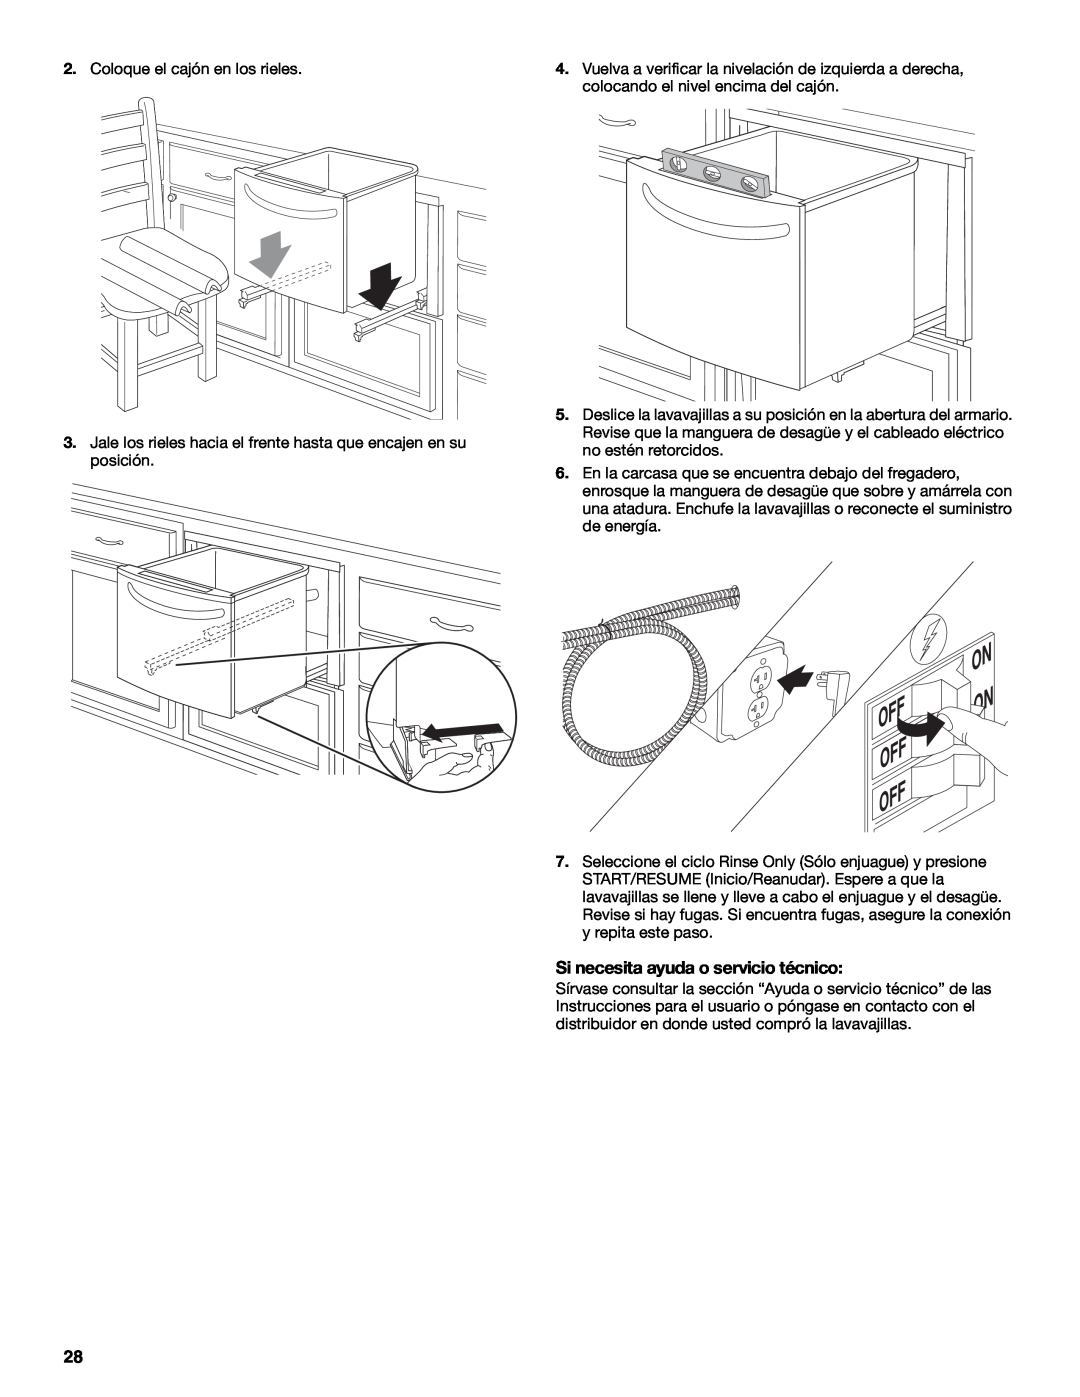 KitchenAid KUDD03STBL installation instructions Si necesita ayuda o servicio técnico 